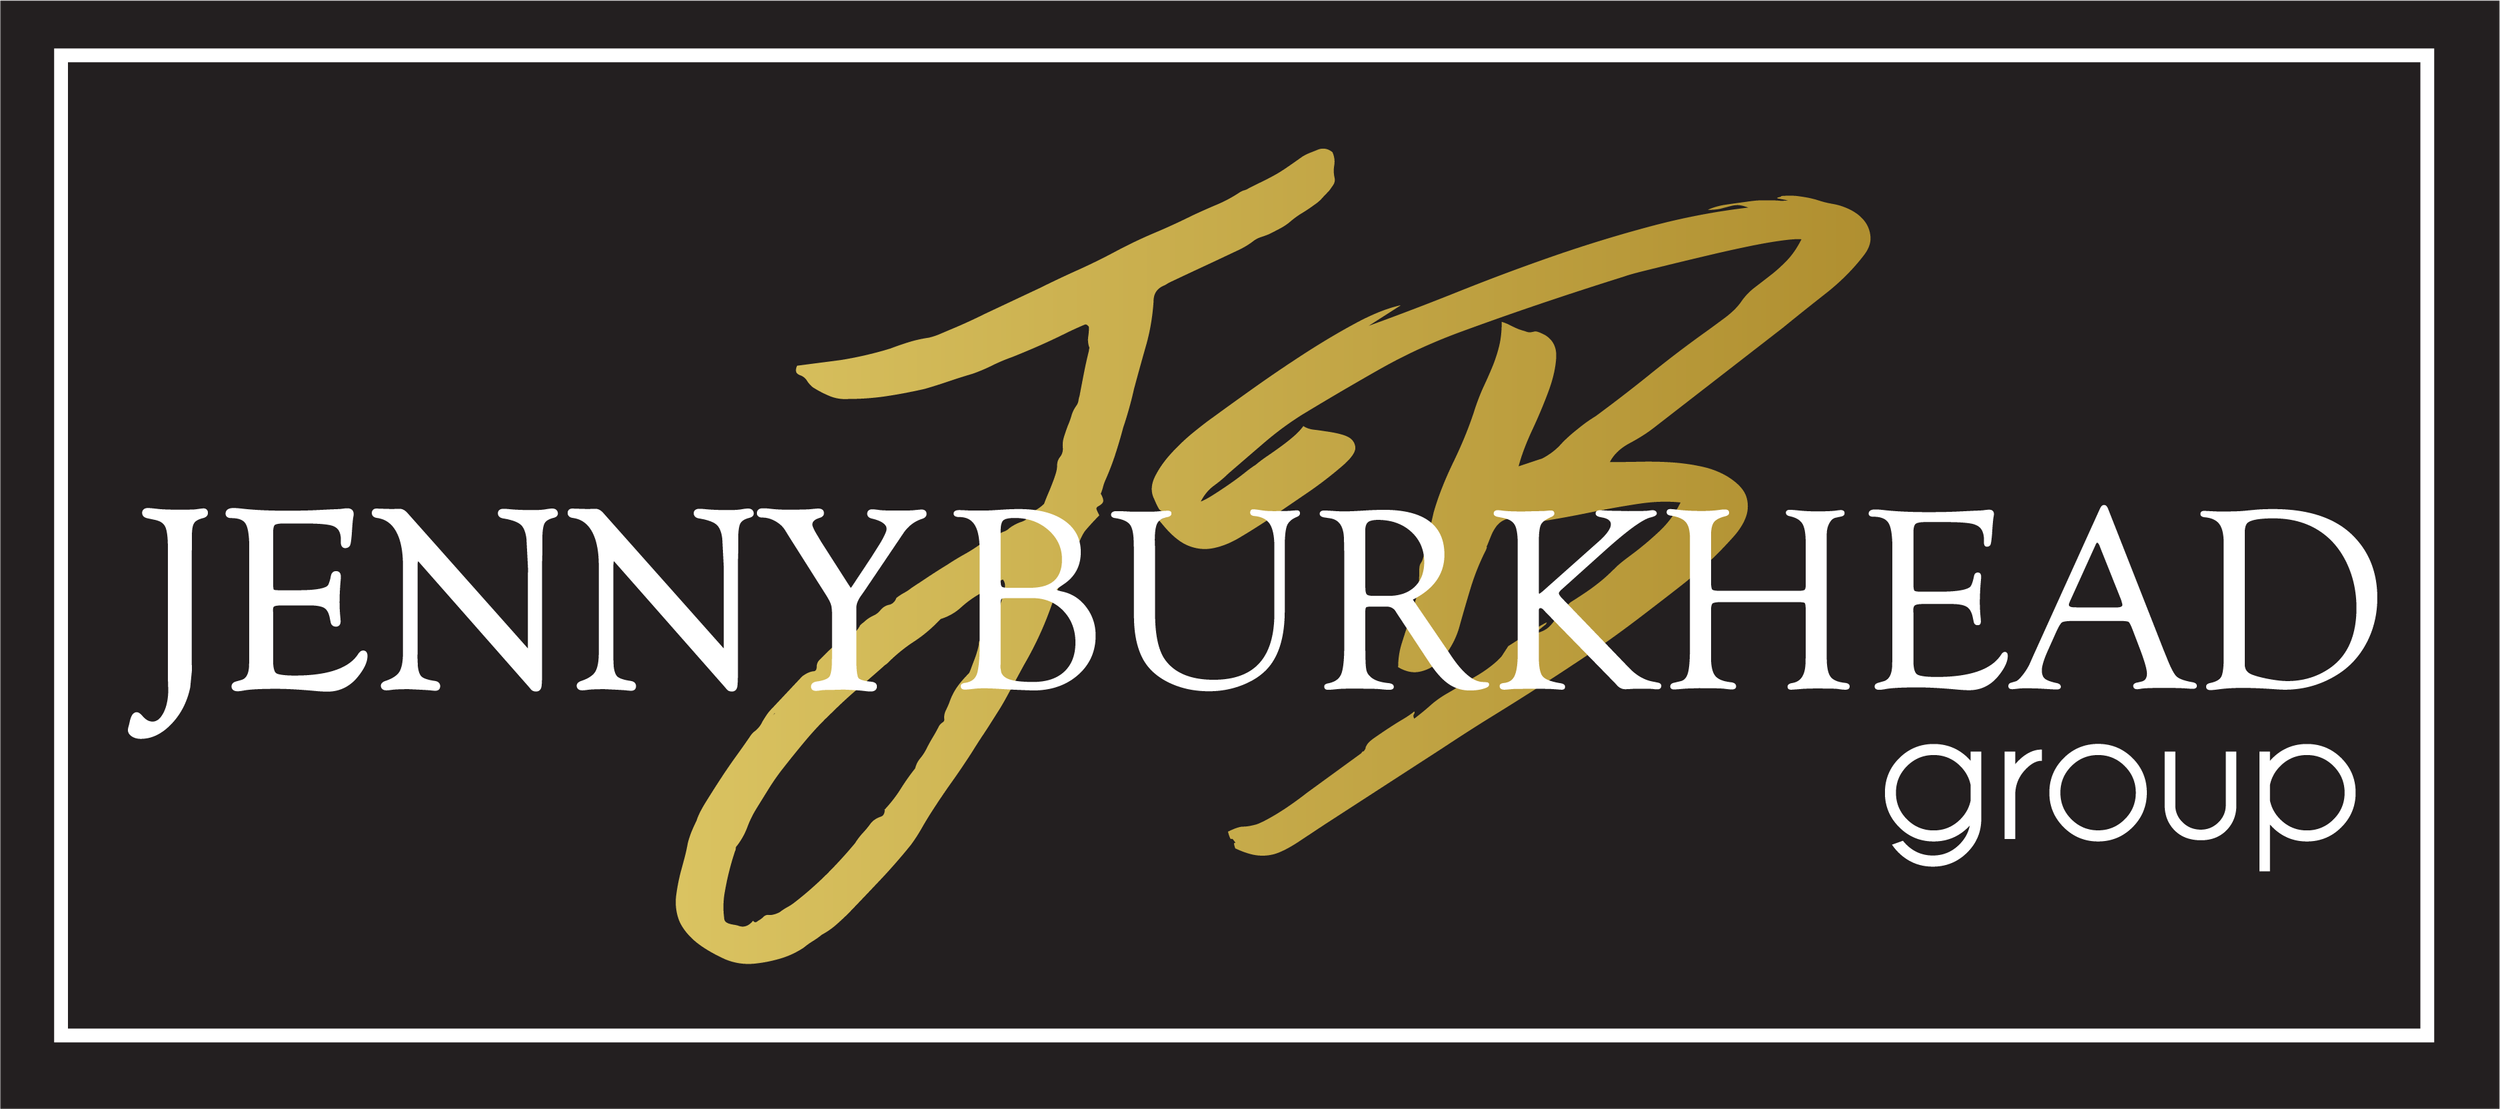 LogoBlackBkgd - Jenny Burkhead.png